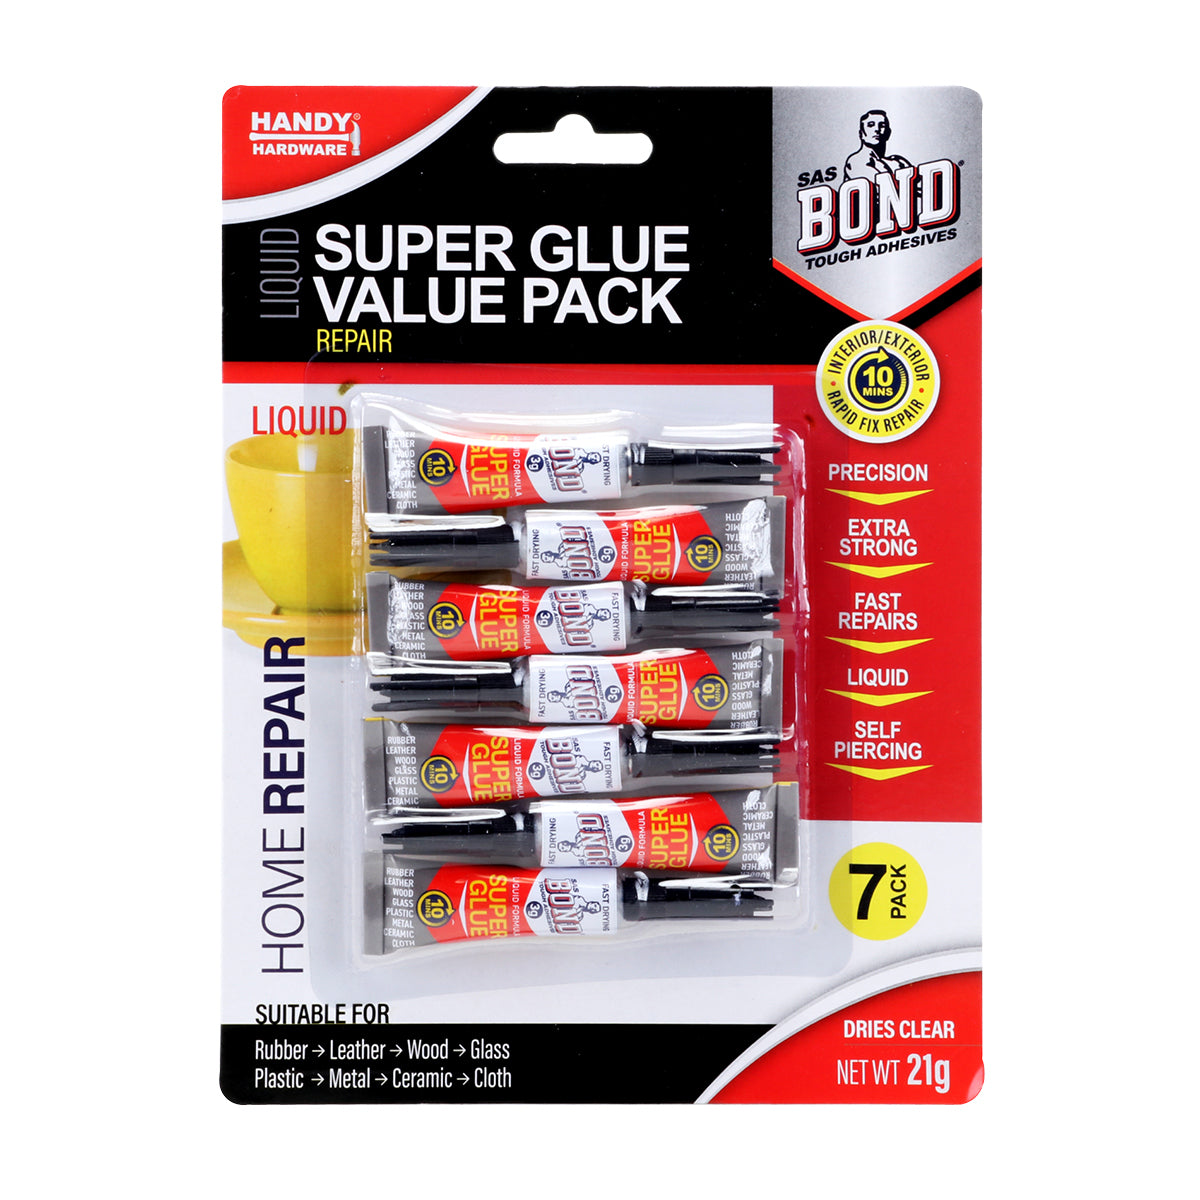 Handy Hardware 252PCE Super Glue Quick Dry High Strength Interior/Exterior 3g